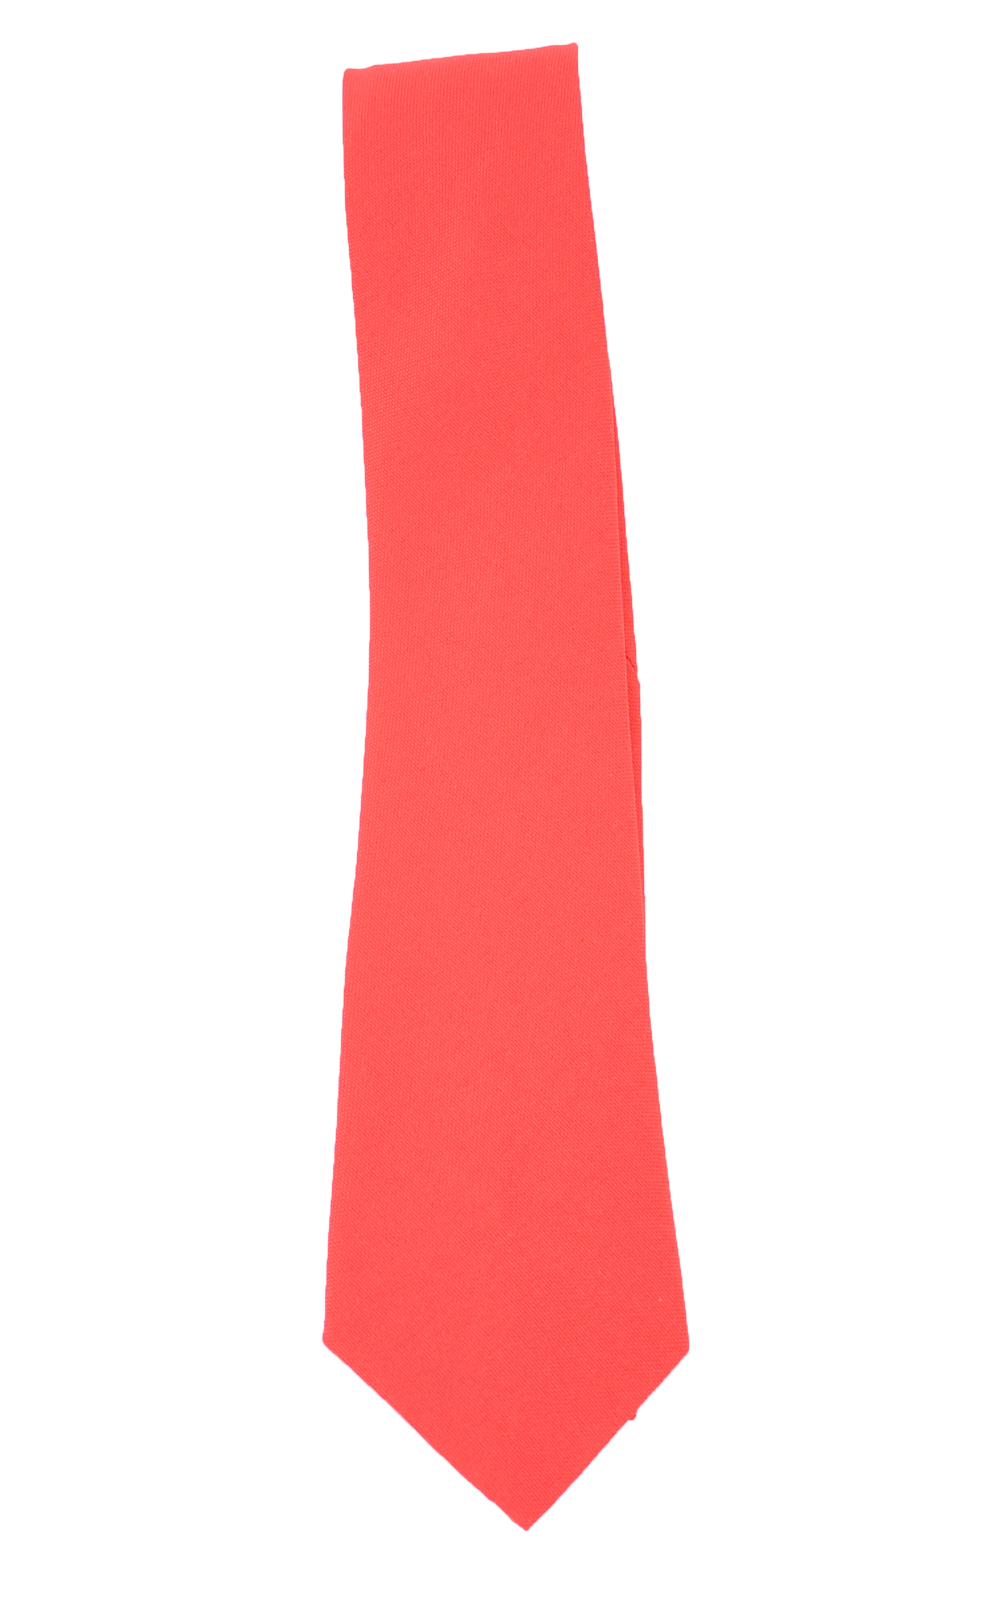 Picture of Plain Primary School Tie - Unicol